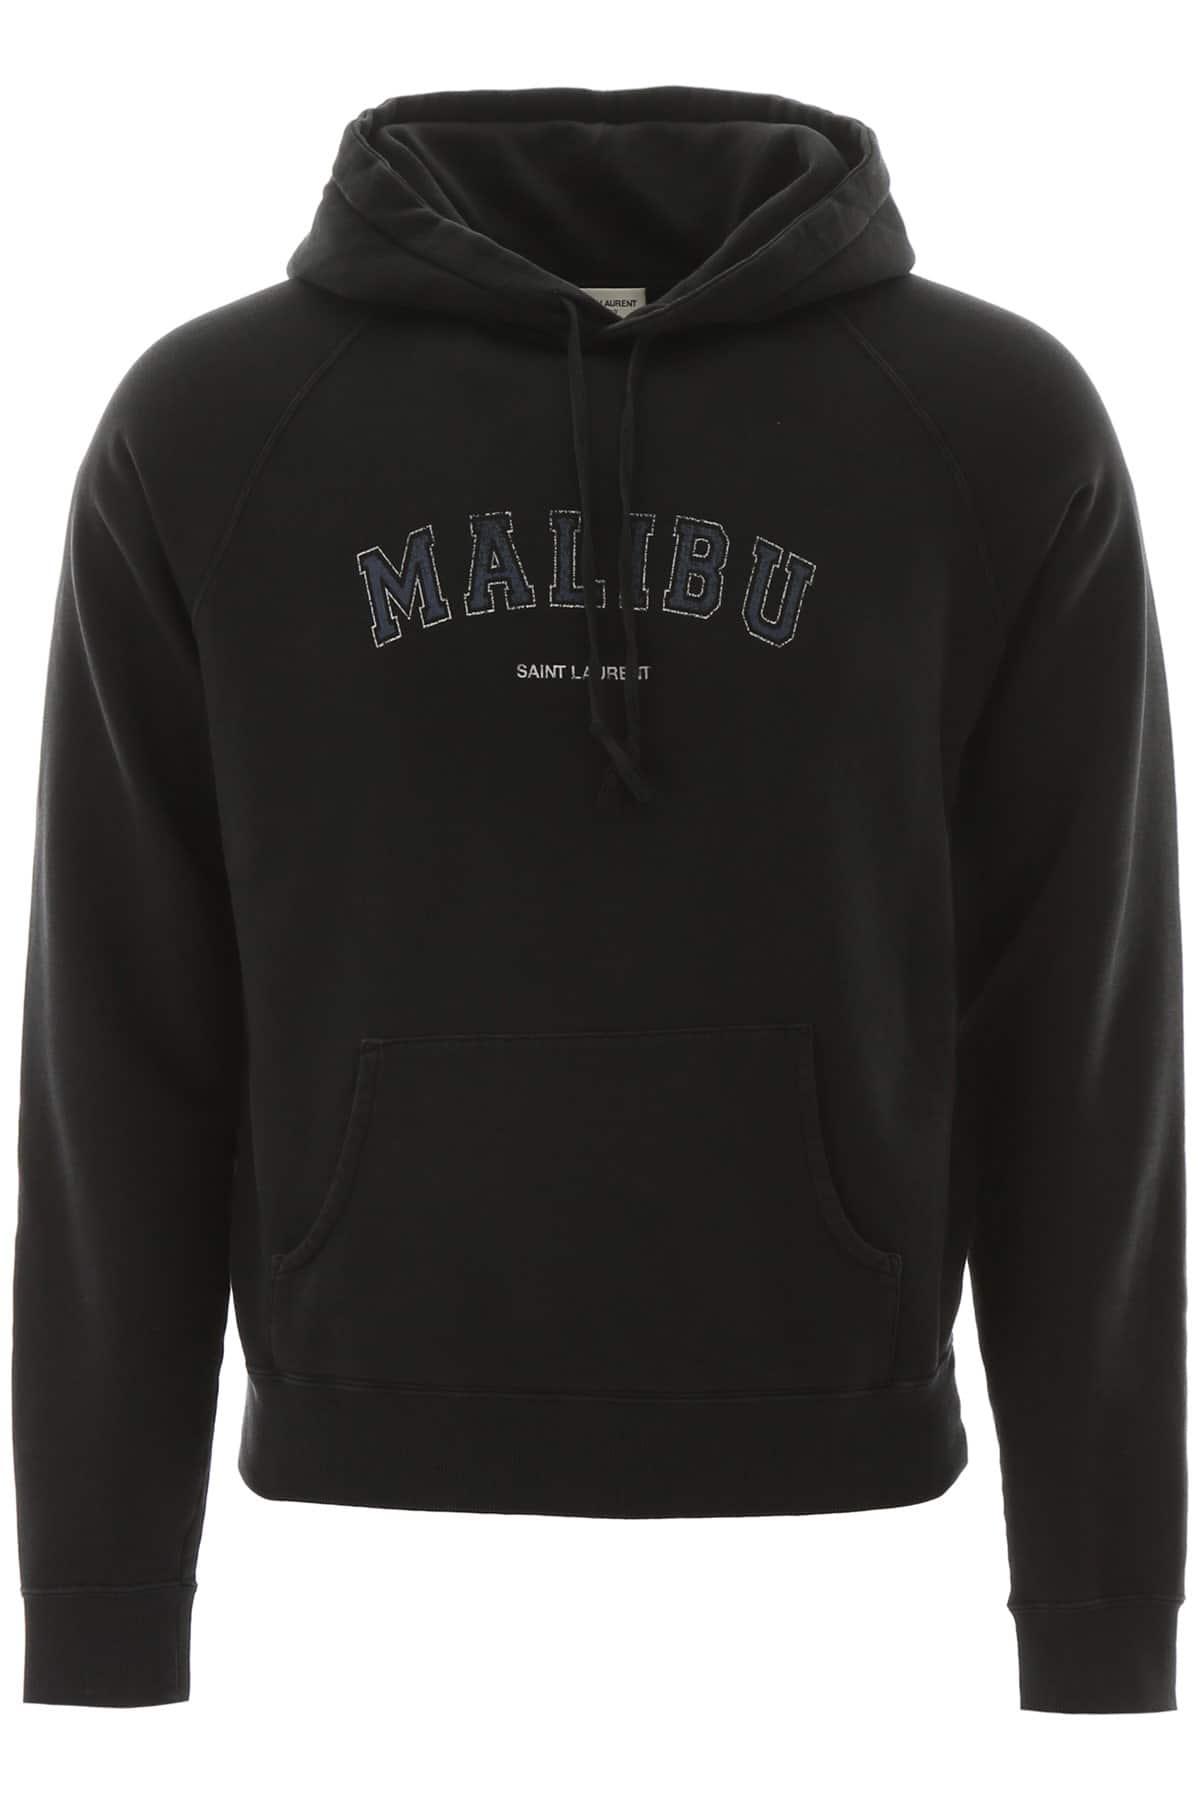 Saint Laurent Malibu Logo Cotton Hoodie in Black for Men - Save 48% - Lyst